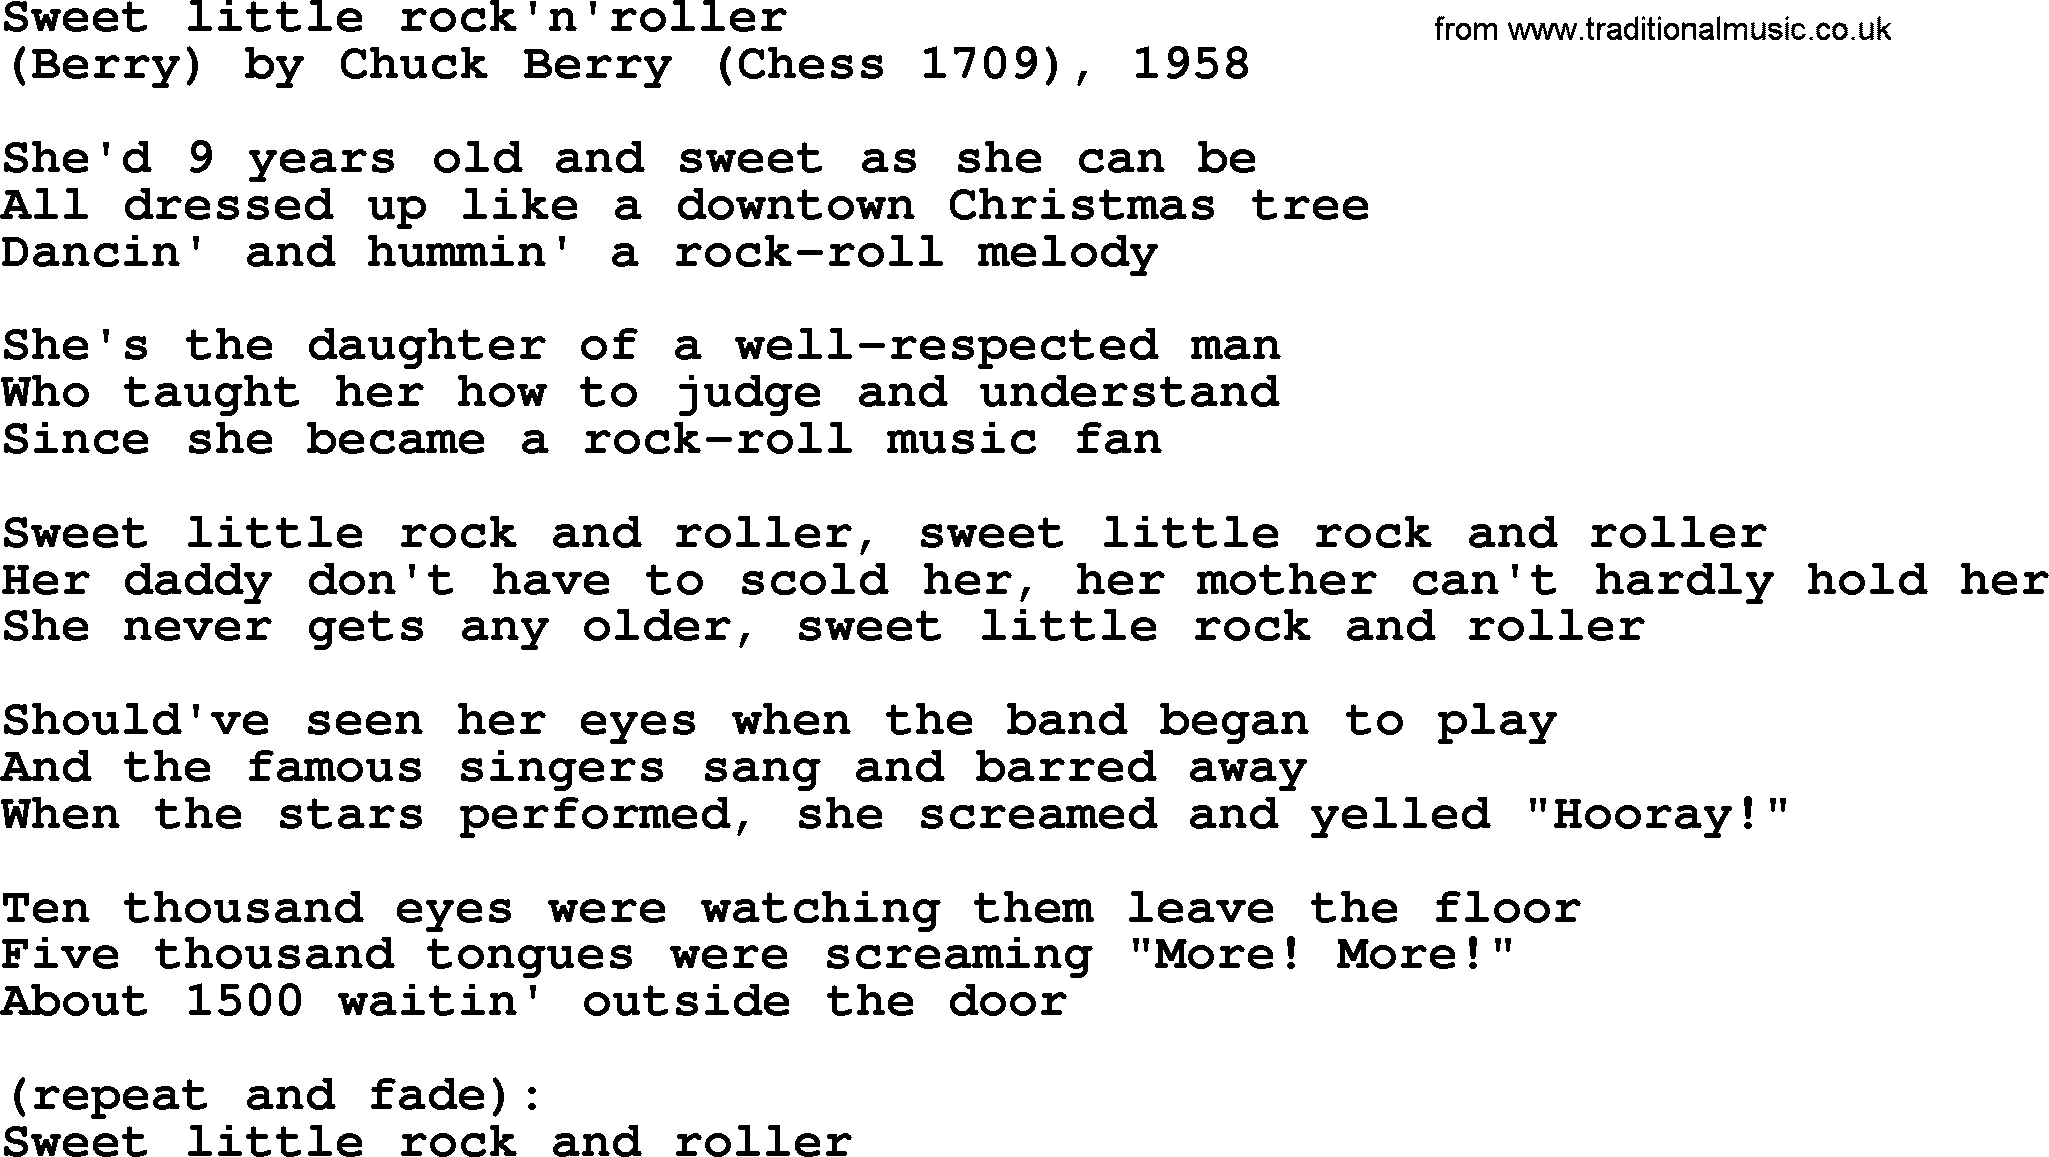 Bruce Springsteen song: Sweet Little Rock'n'roller lyrics